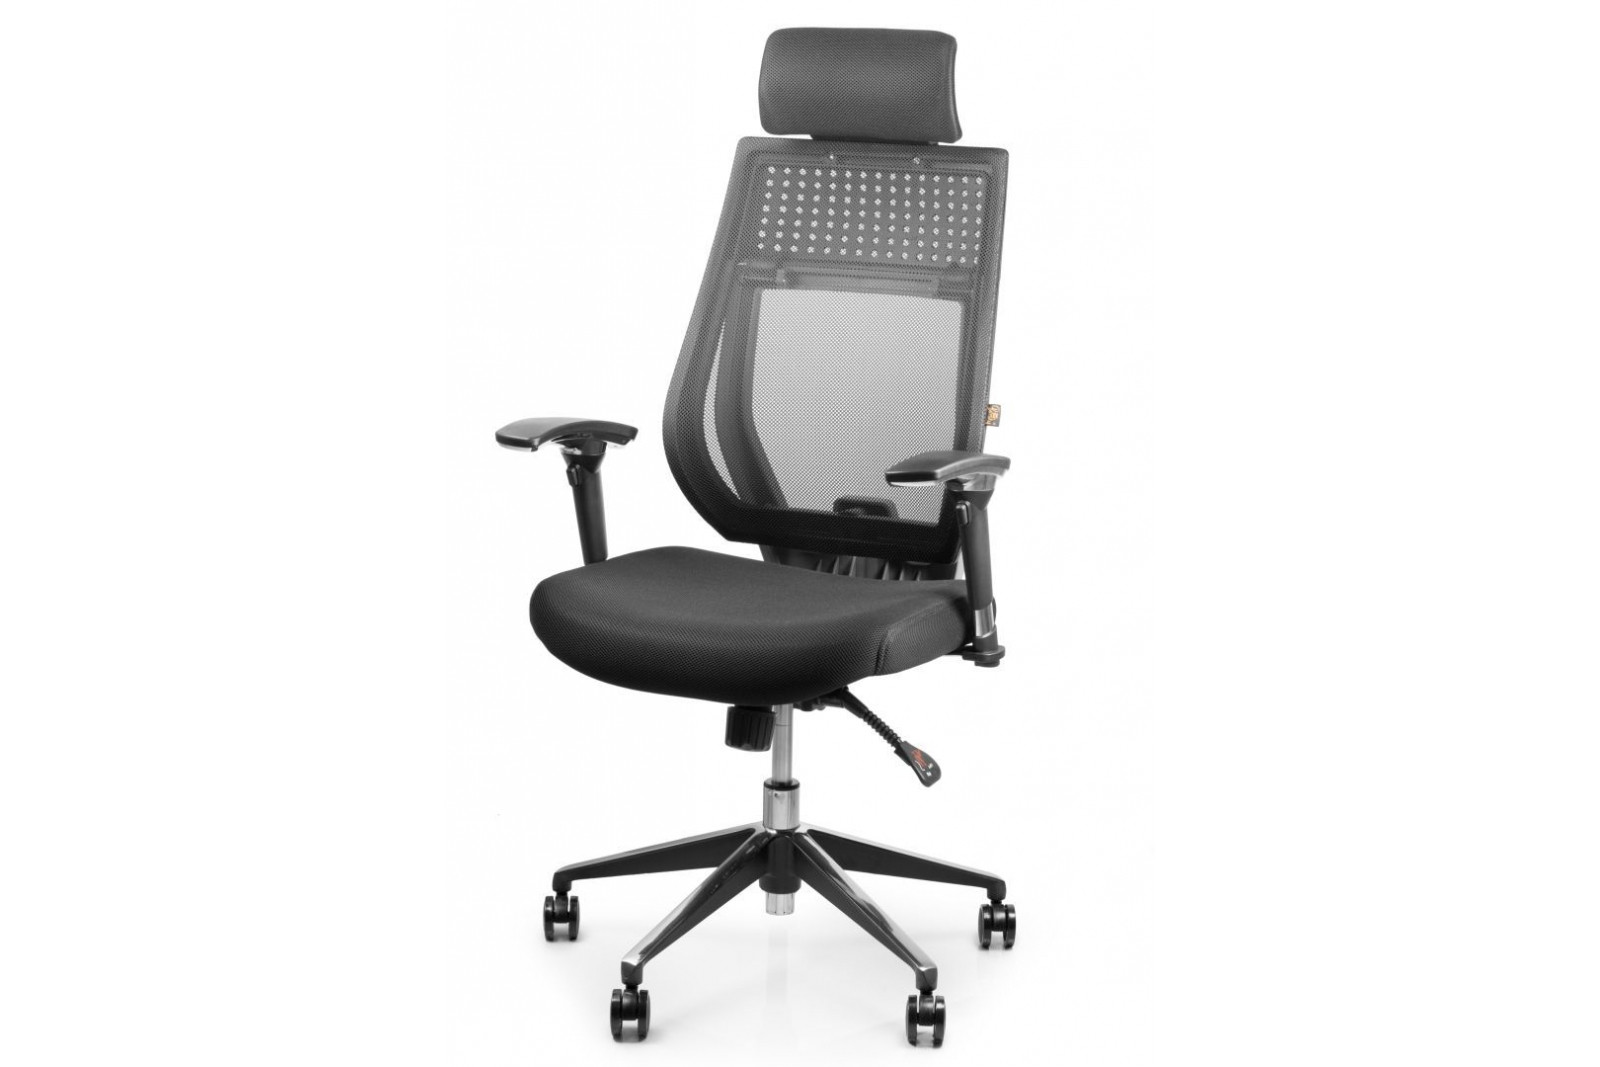 Кресло офисное BRS- Team White/Grey Arm_2D alum-chrome TWG2d_alu-01